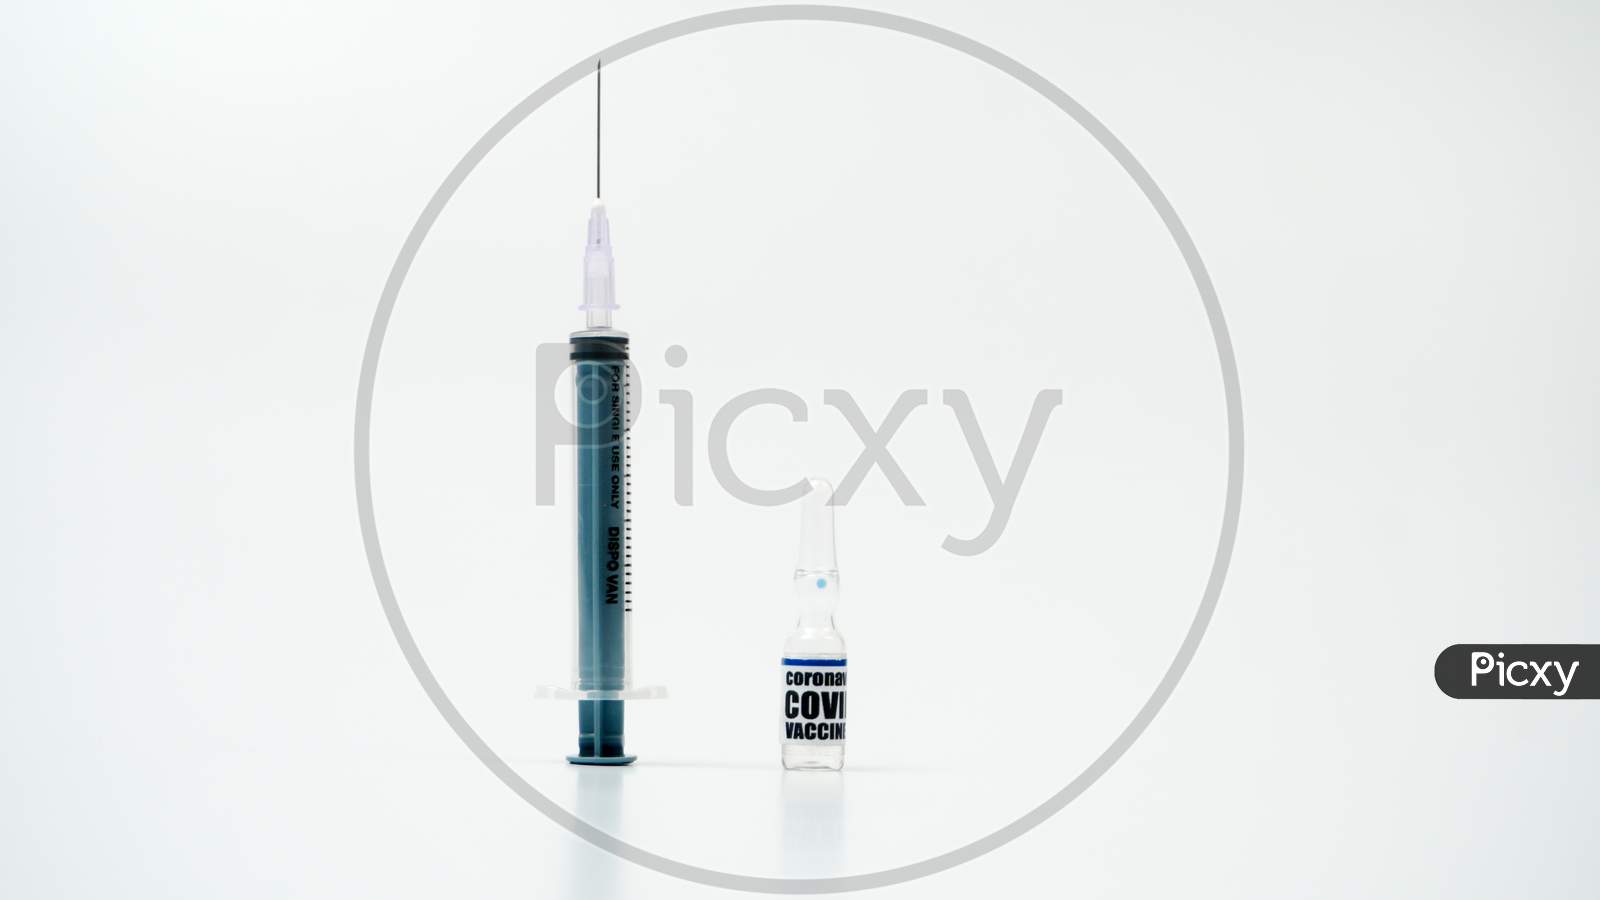 Covid-19 Ampoule Corona Virus 2019-Ncov Vaccine Syringe Injection Vials Medicine Drug Bottle. Vaccination, Immunization, Treatment To Cure Covid-19 Corona Virus Infection. Medical Concept.